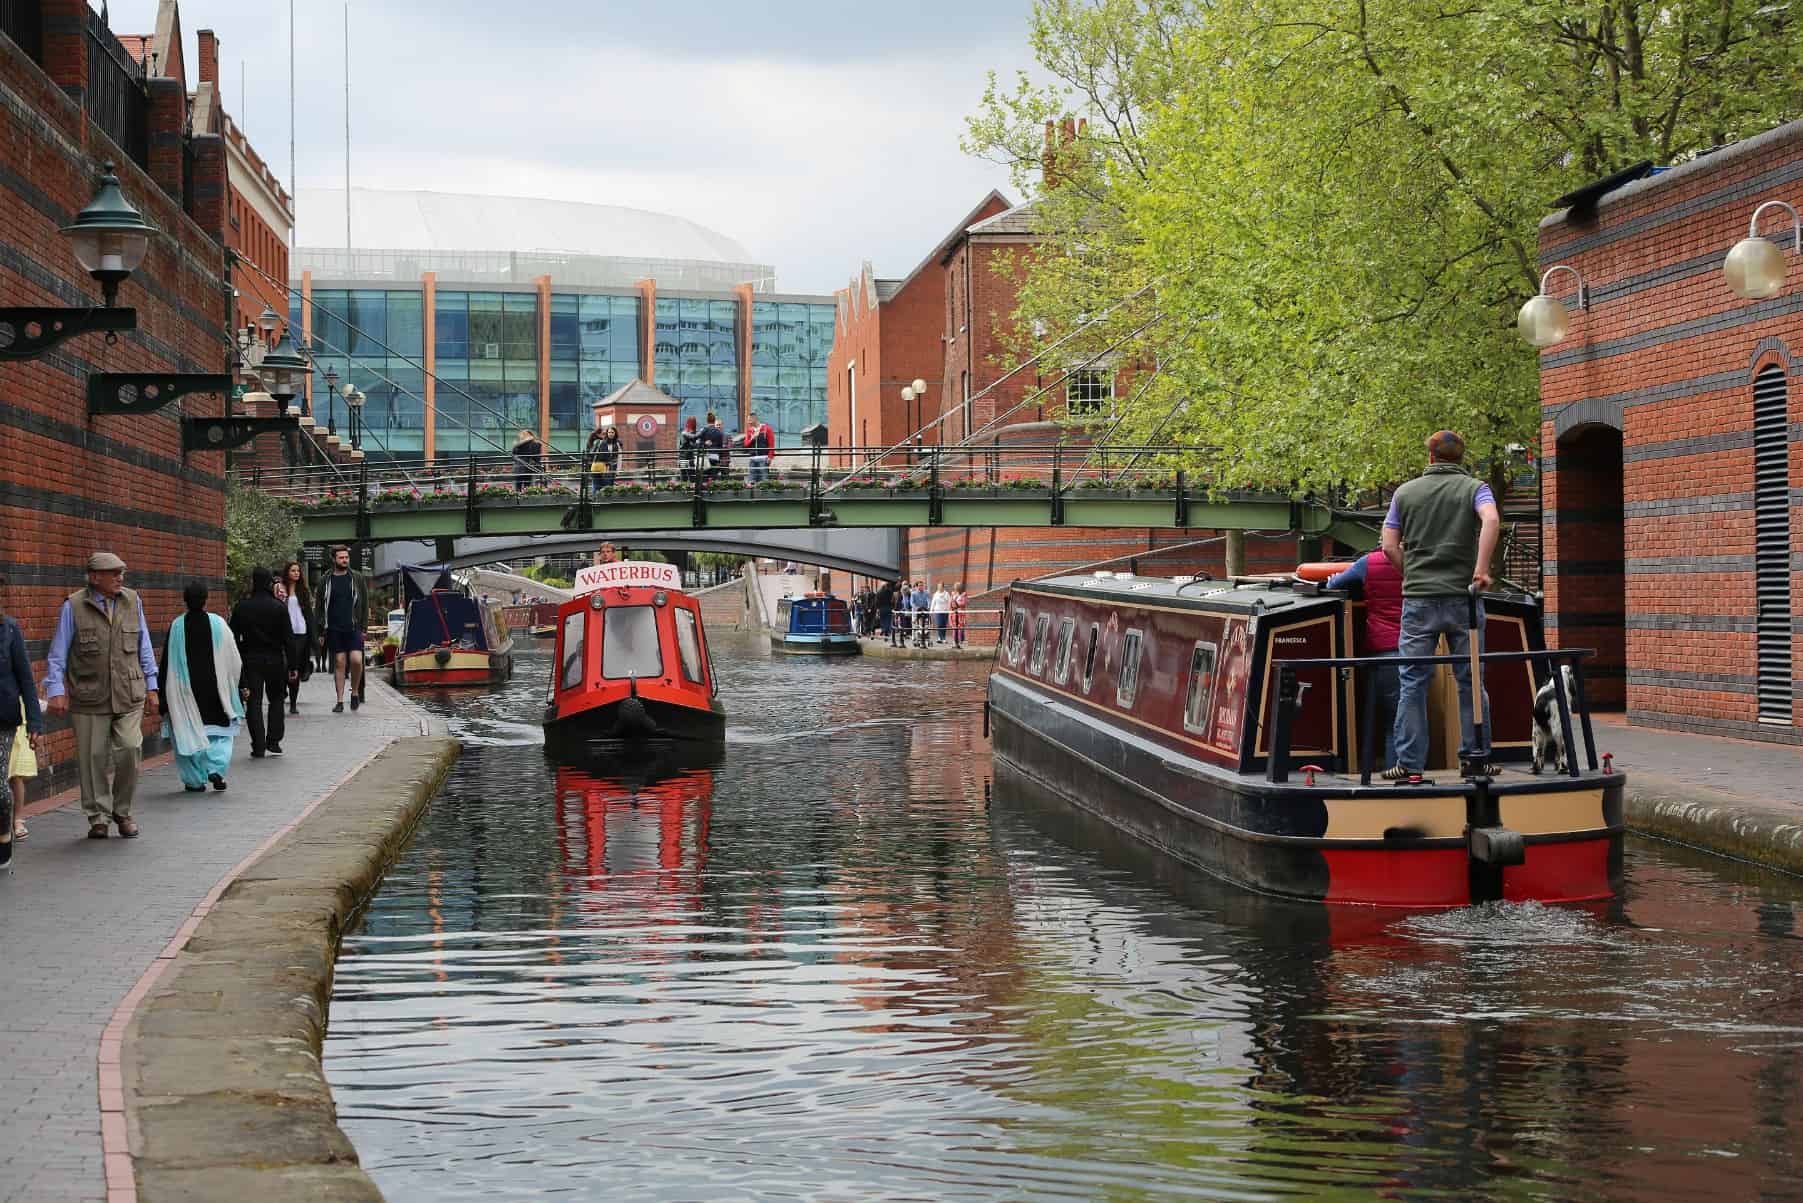 The Birmingham Canals